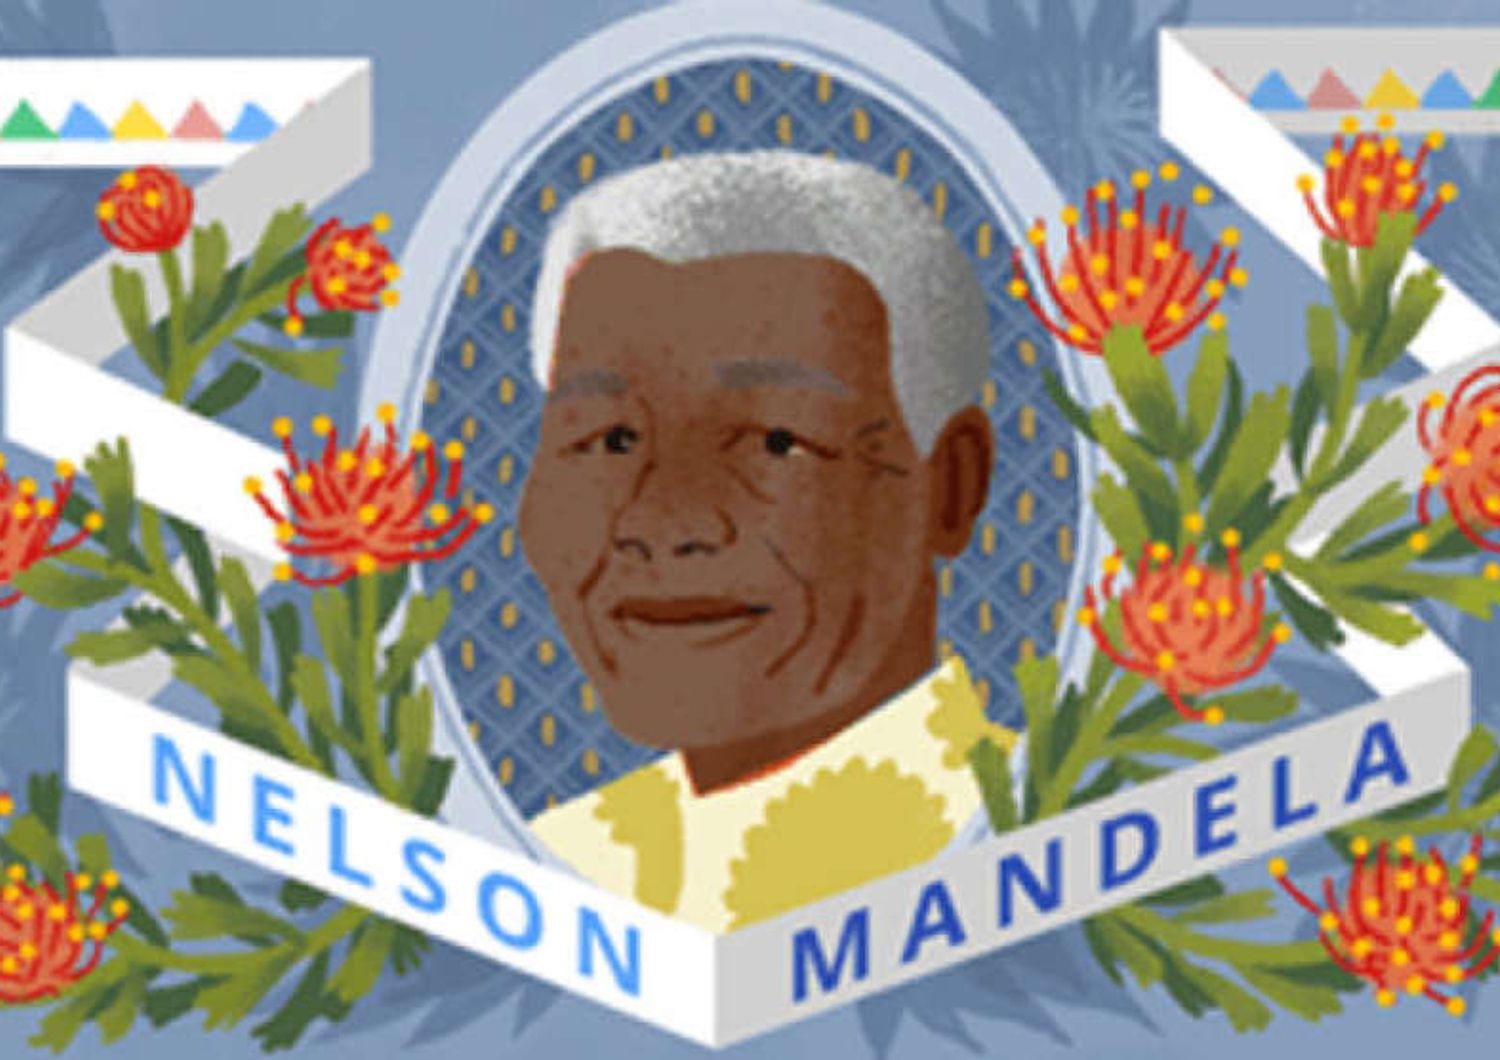 Il mondo celebra il primo Mandela Day dopo morte Madiba